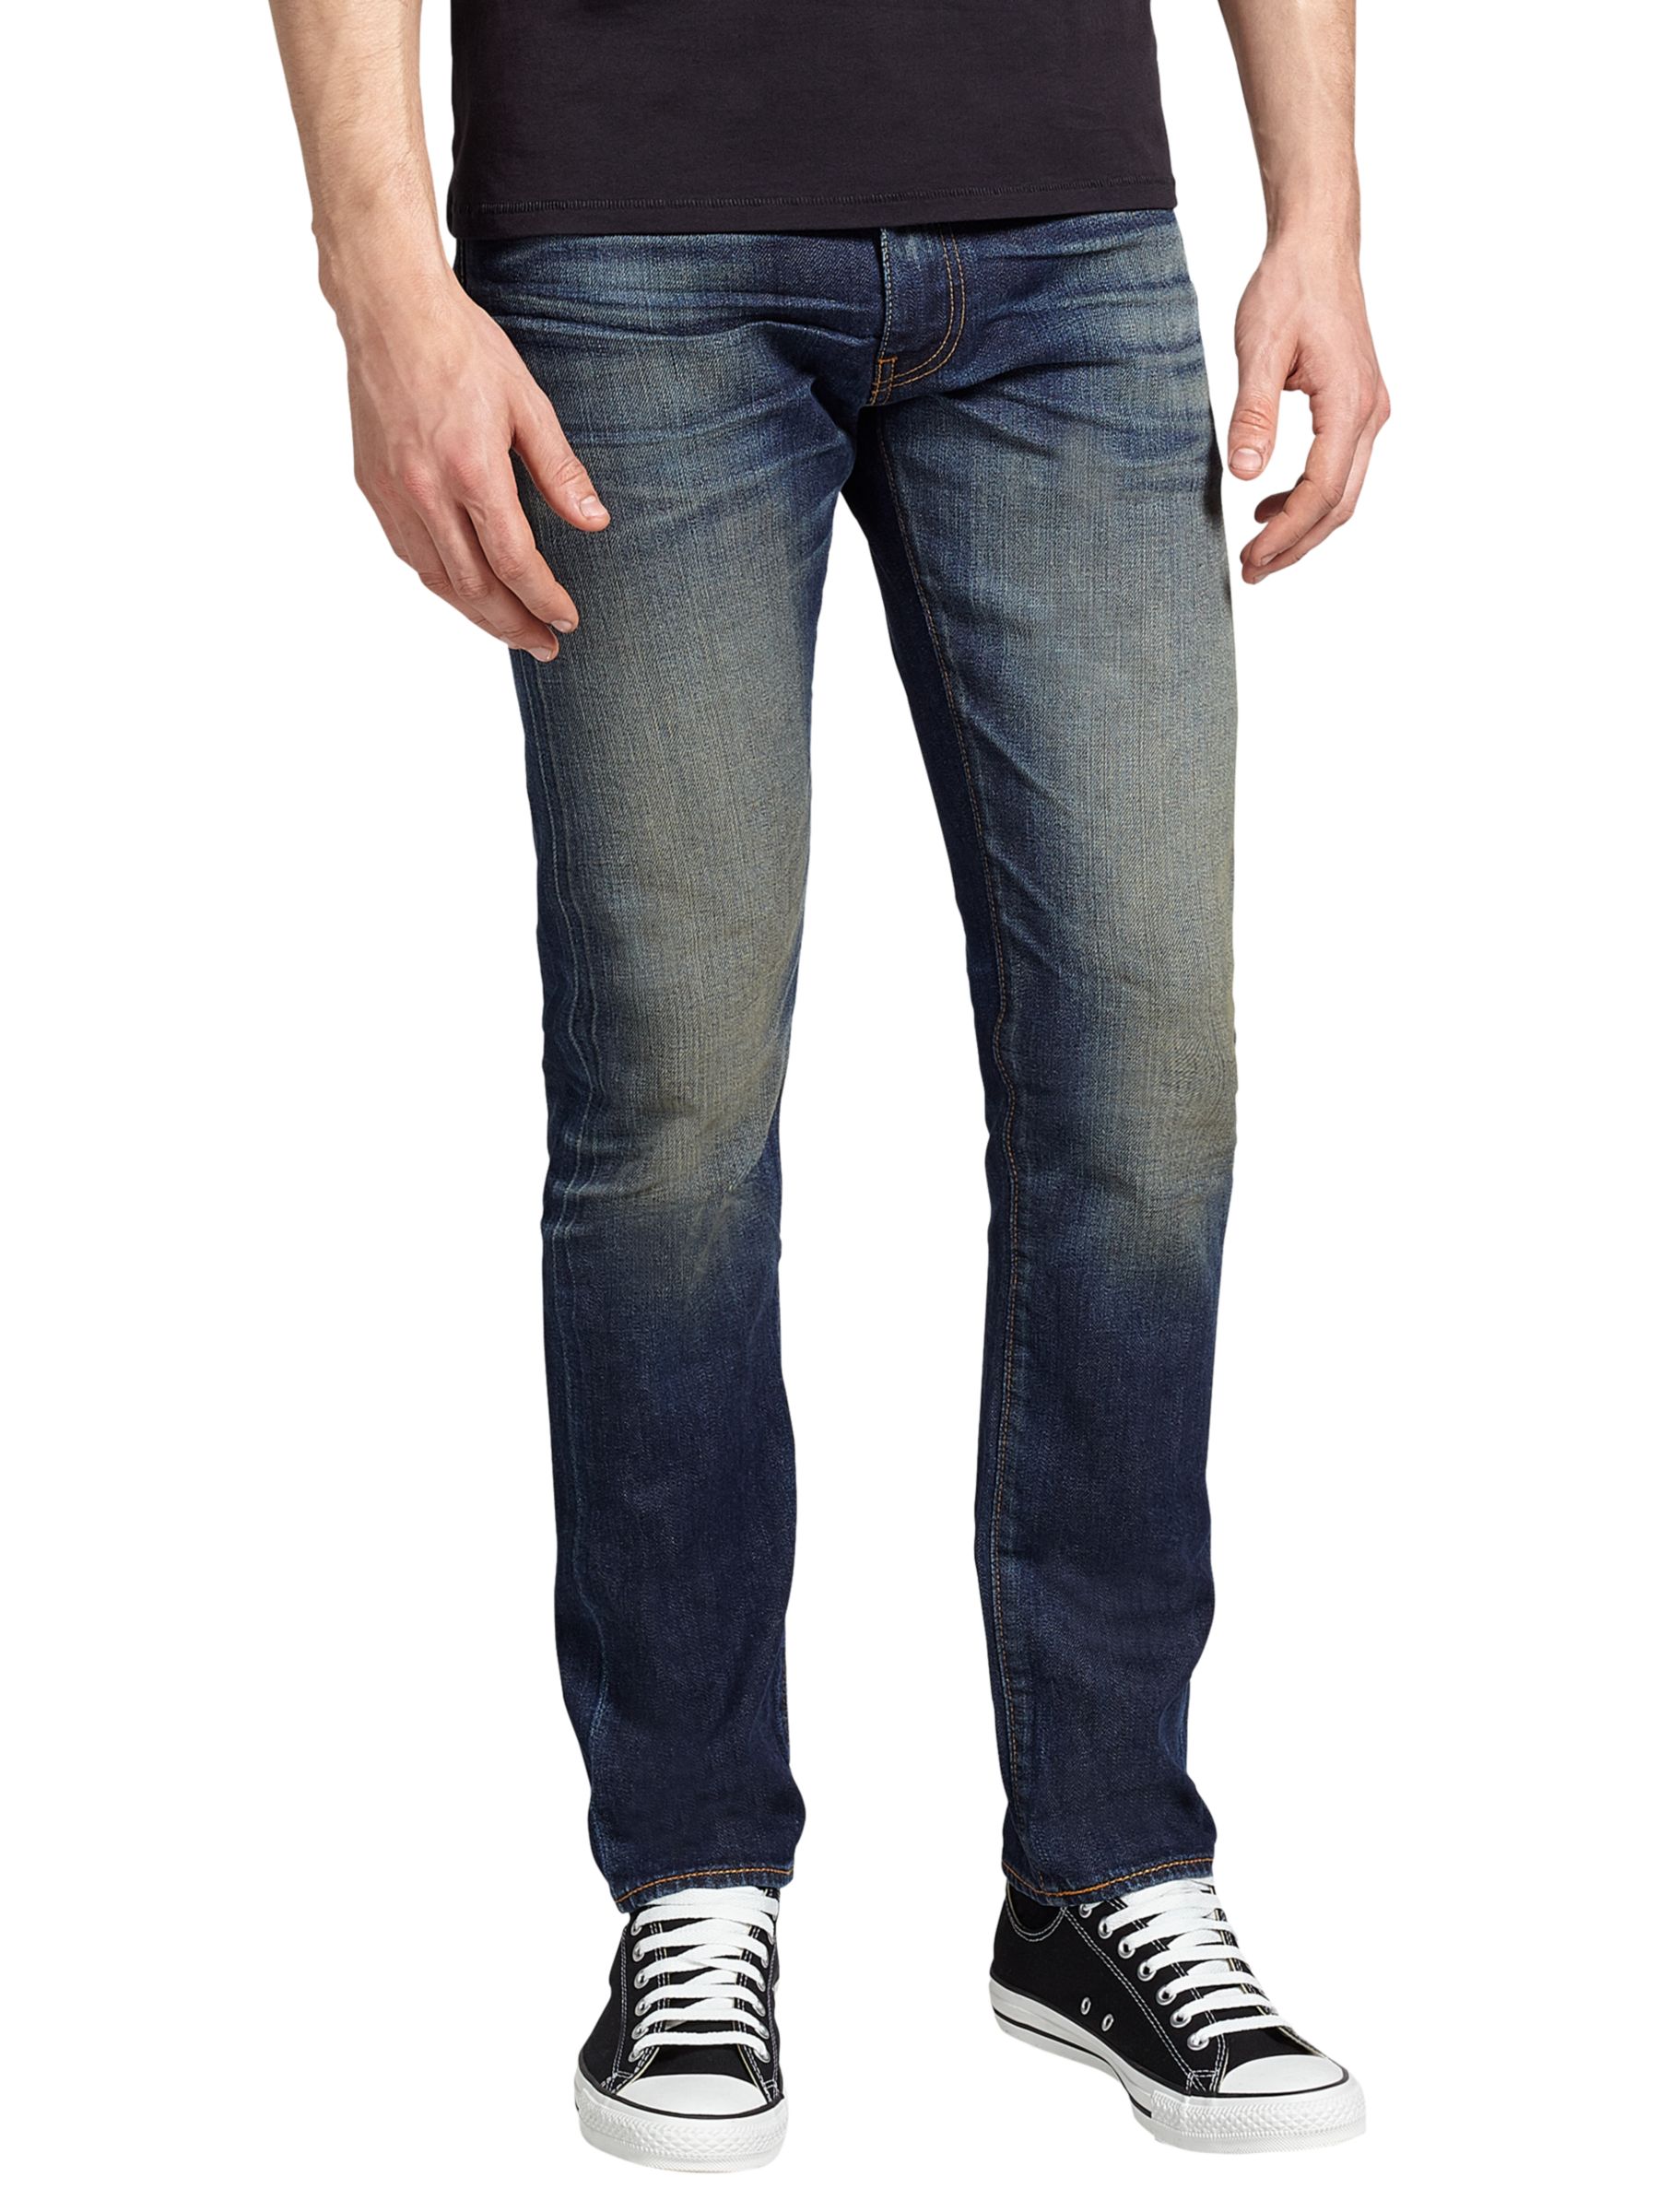 511 selvedge jeans